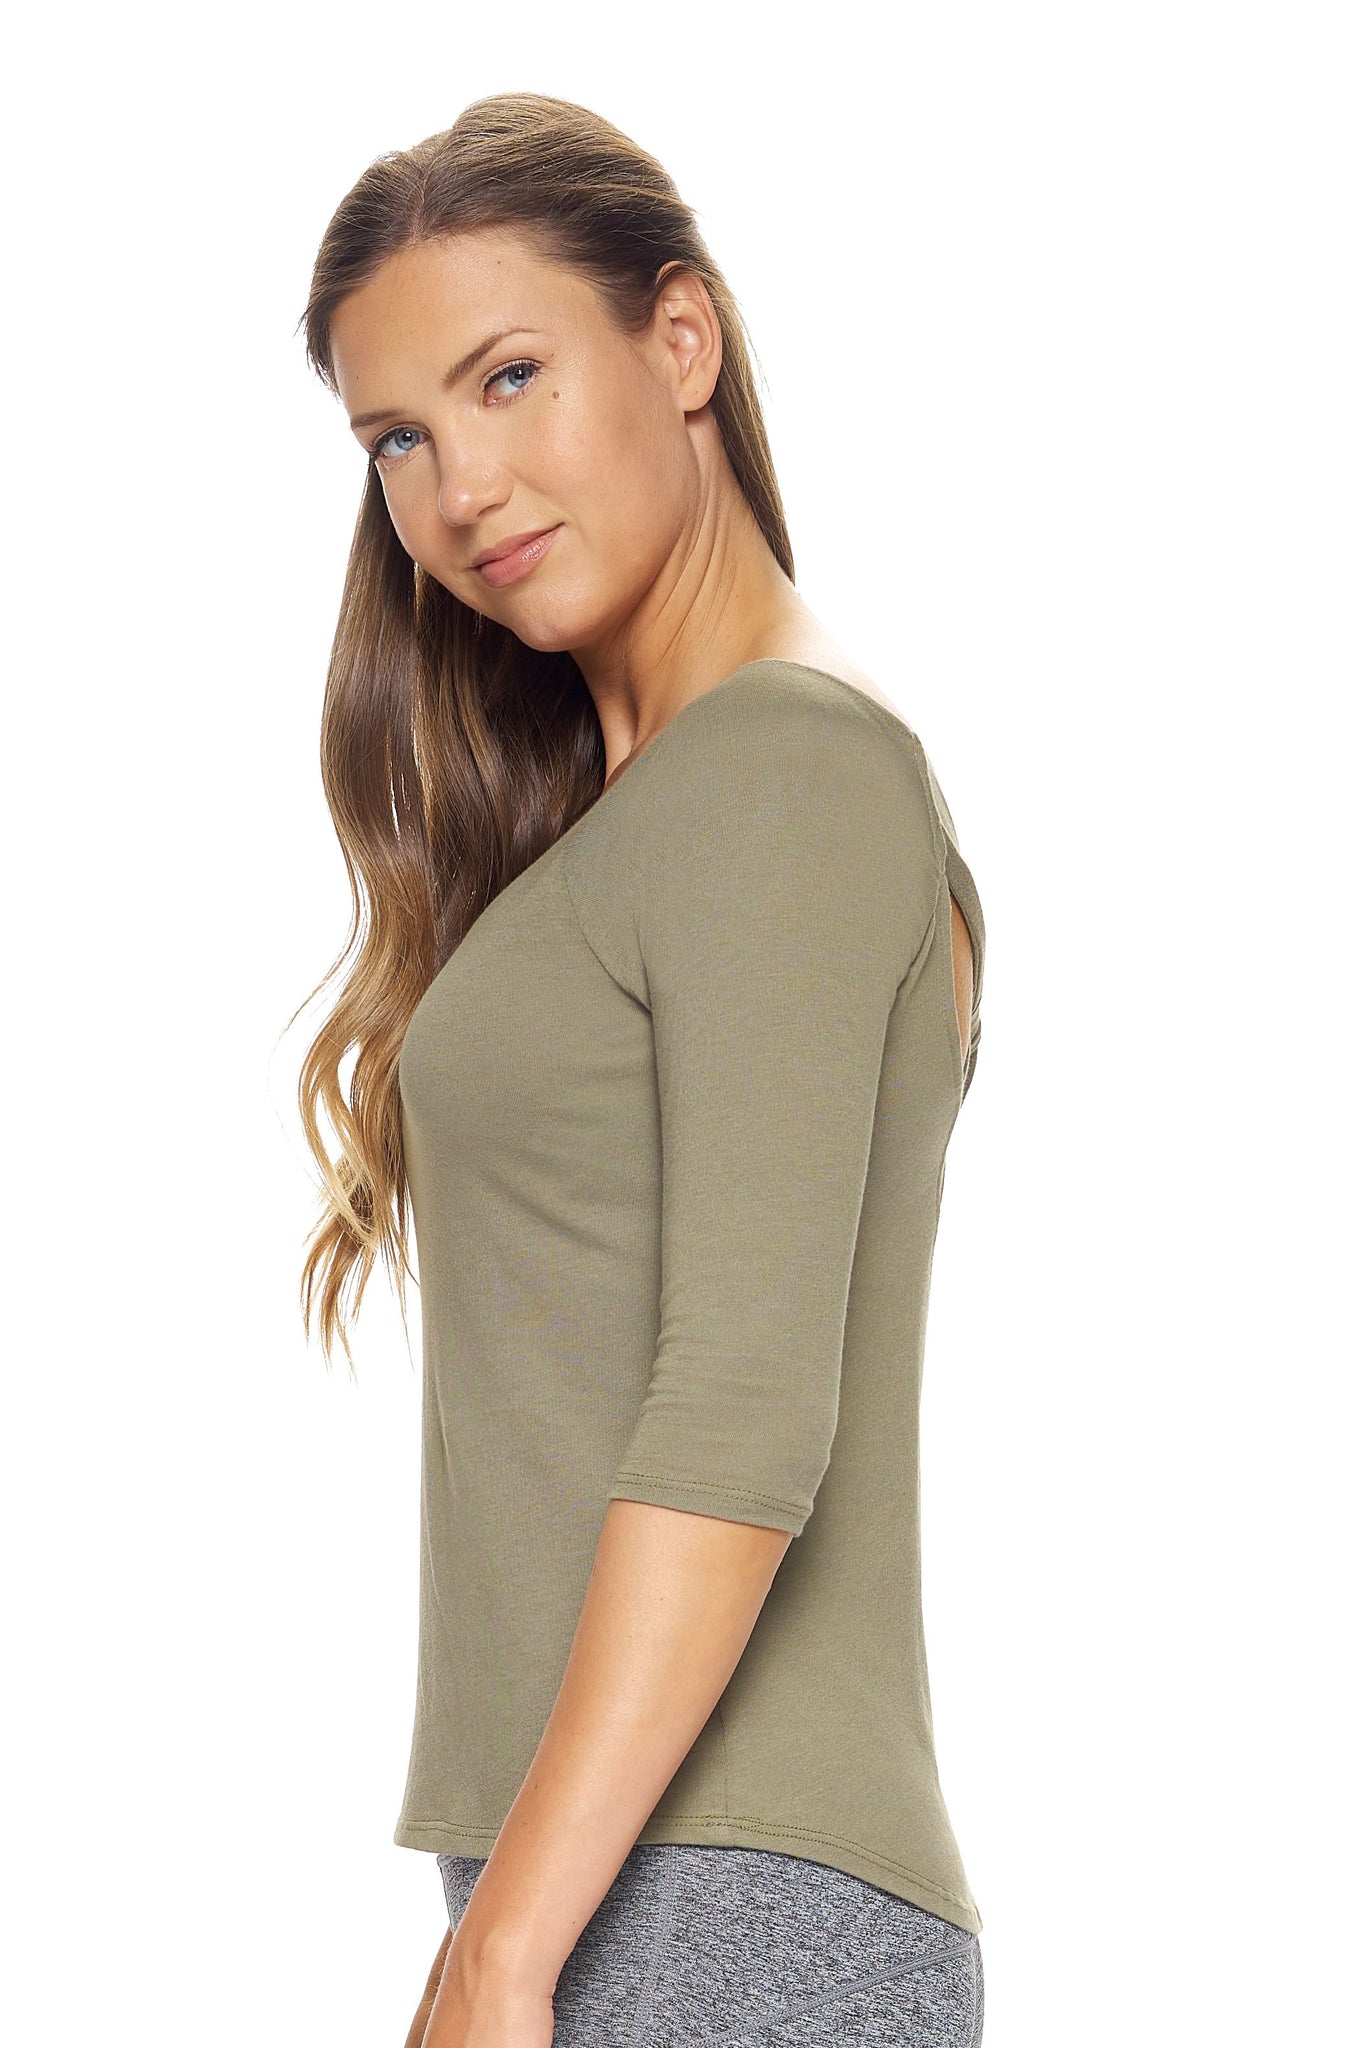 Expert Brand Wholesale Women's MoCA™ 3/4 Sleeve Cross Back Tee in Olive Image 3#olive